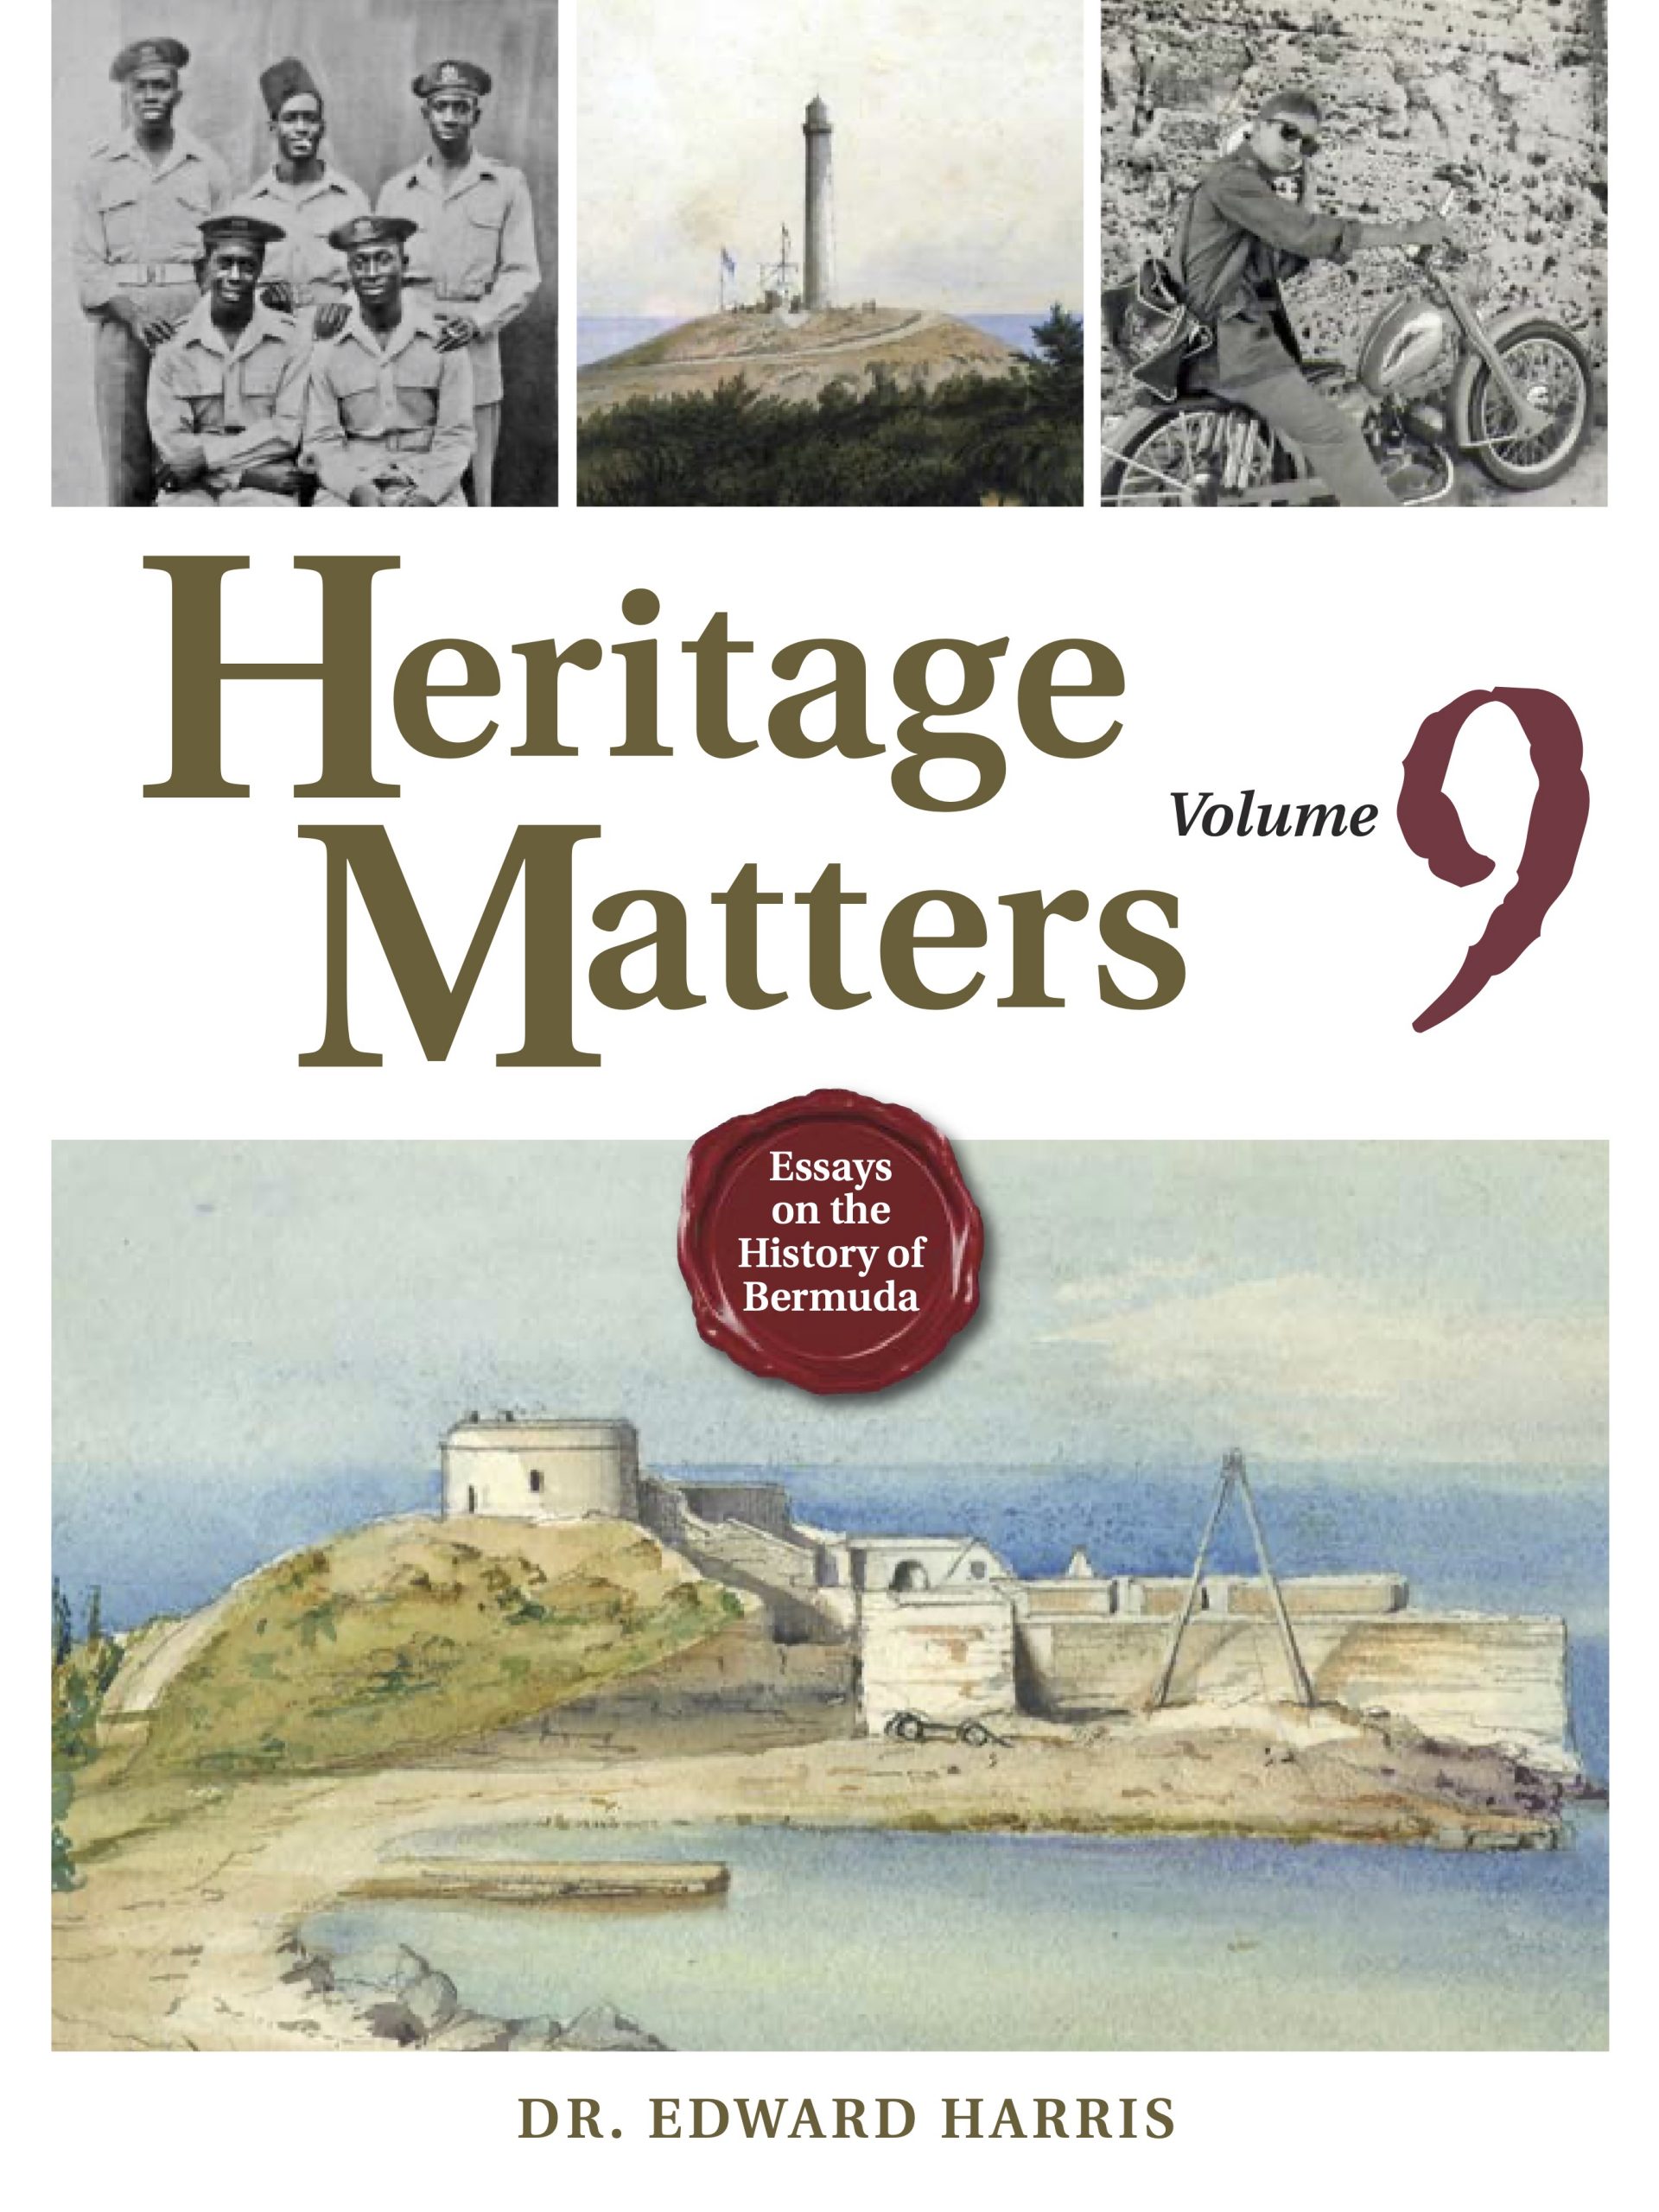 Heritage Matters Volume 9